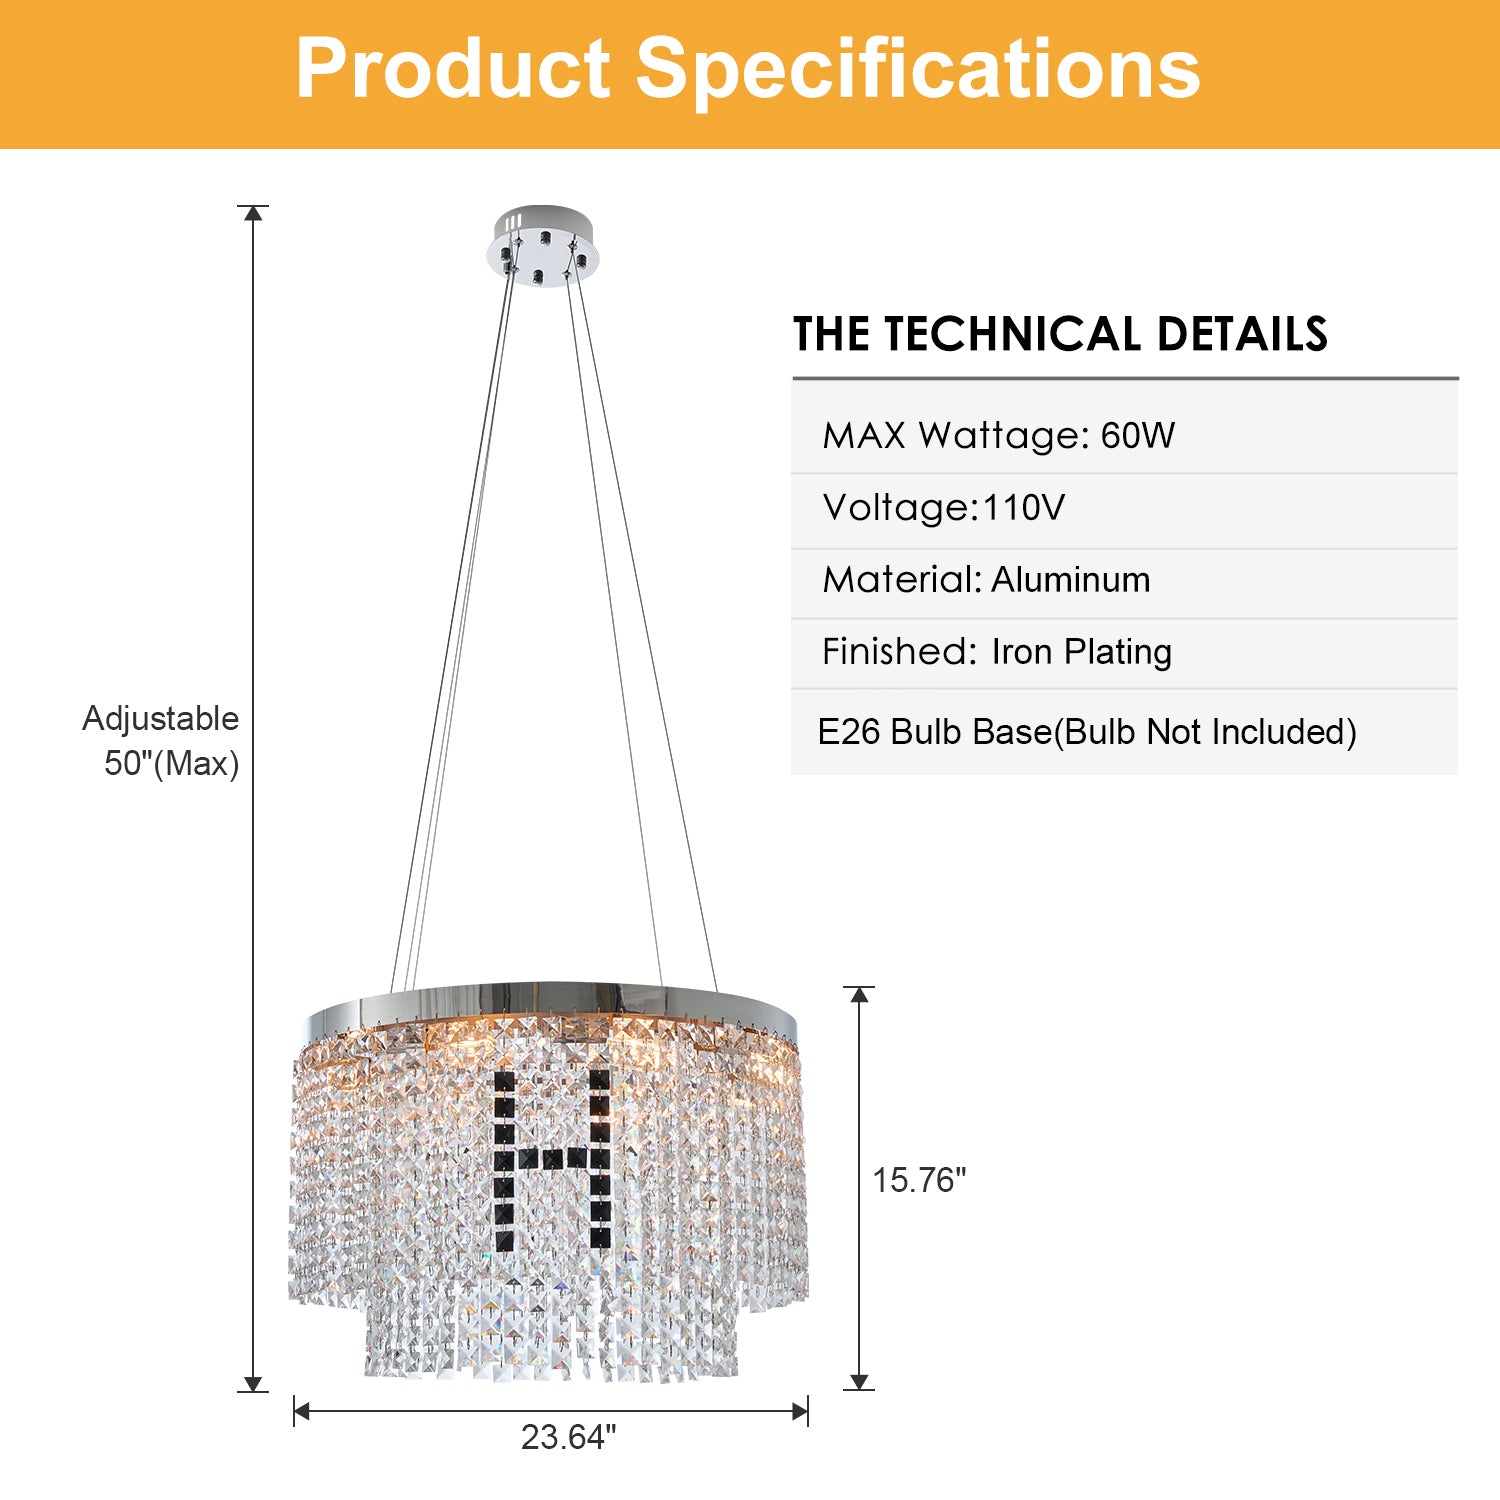 Modern Crystal Chandelier Round Crystal Lamp Luxury Home Decor Light Fixture